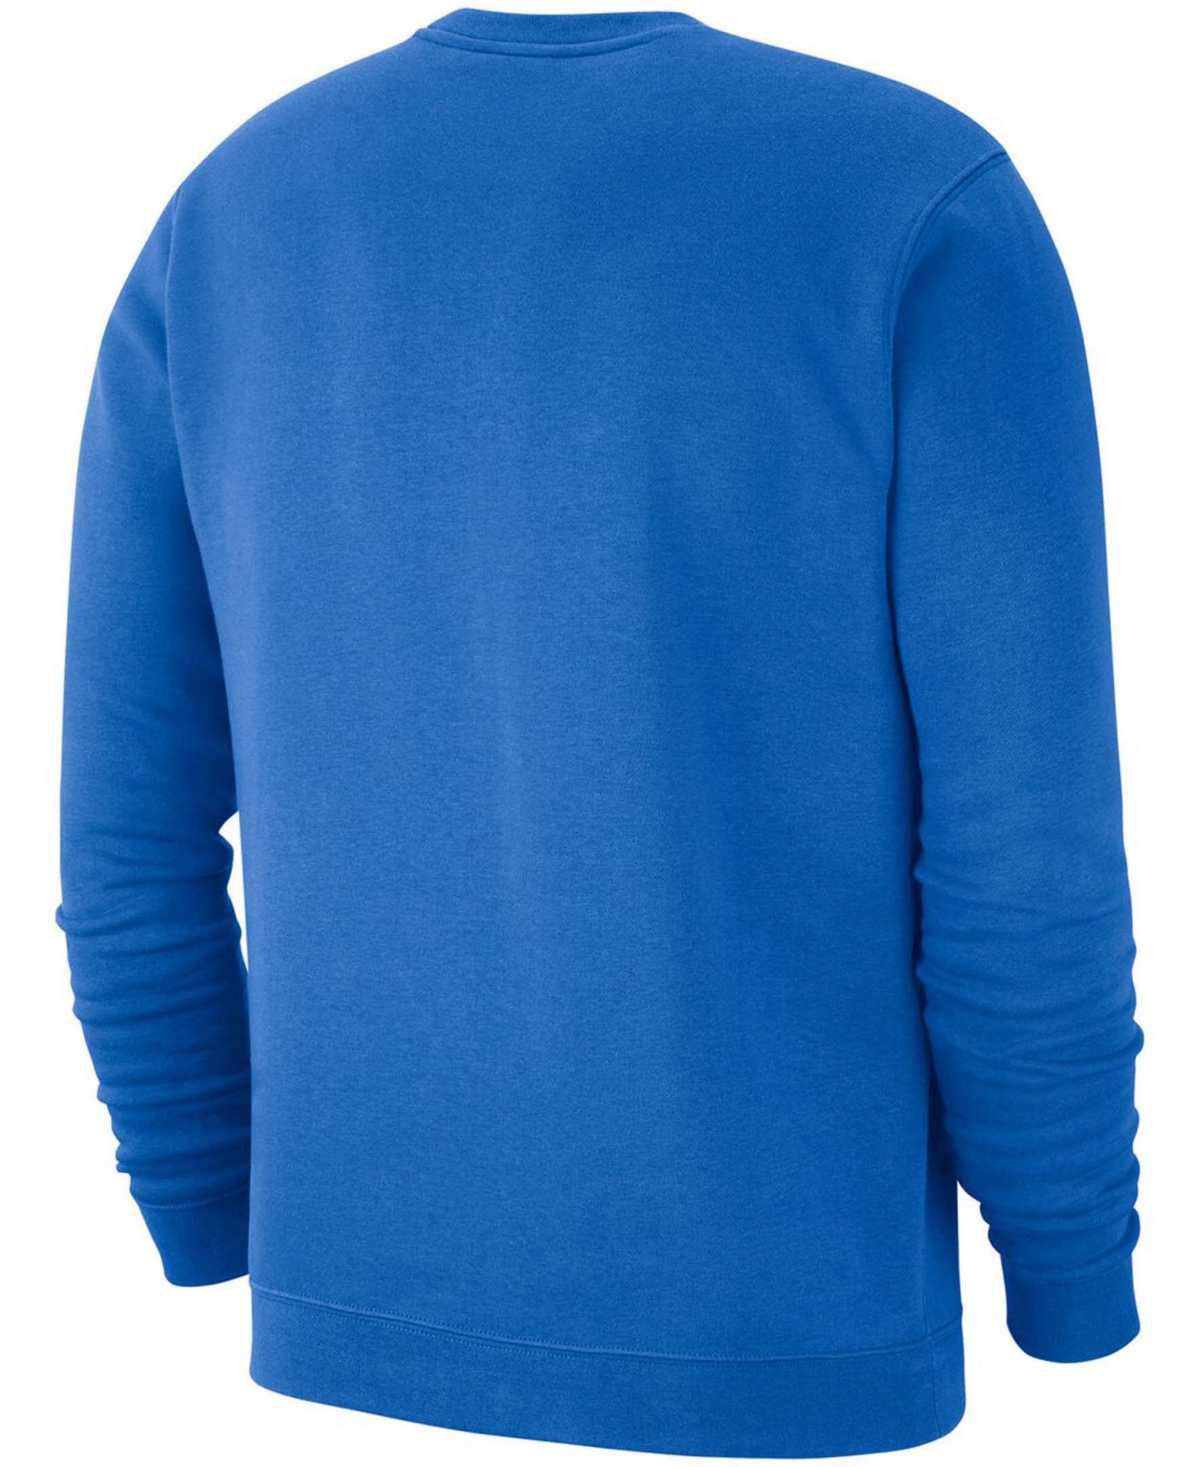 Shop Nike Men's Blue Ucla Bruins Club Fleece Pullover Sweatshirt